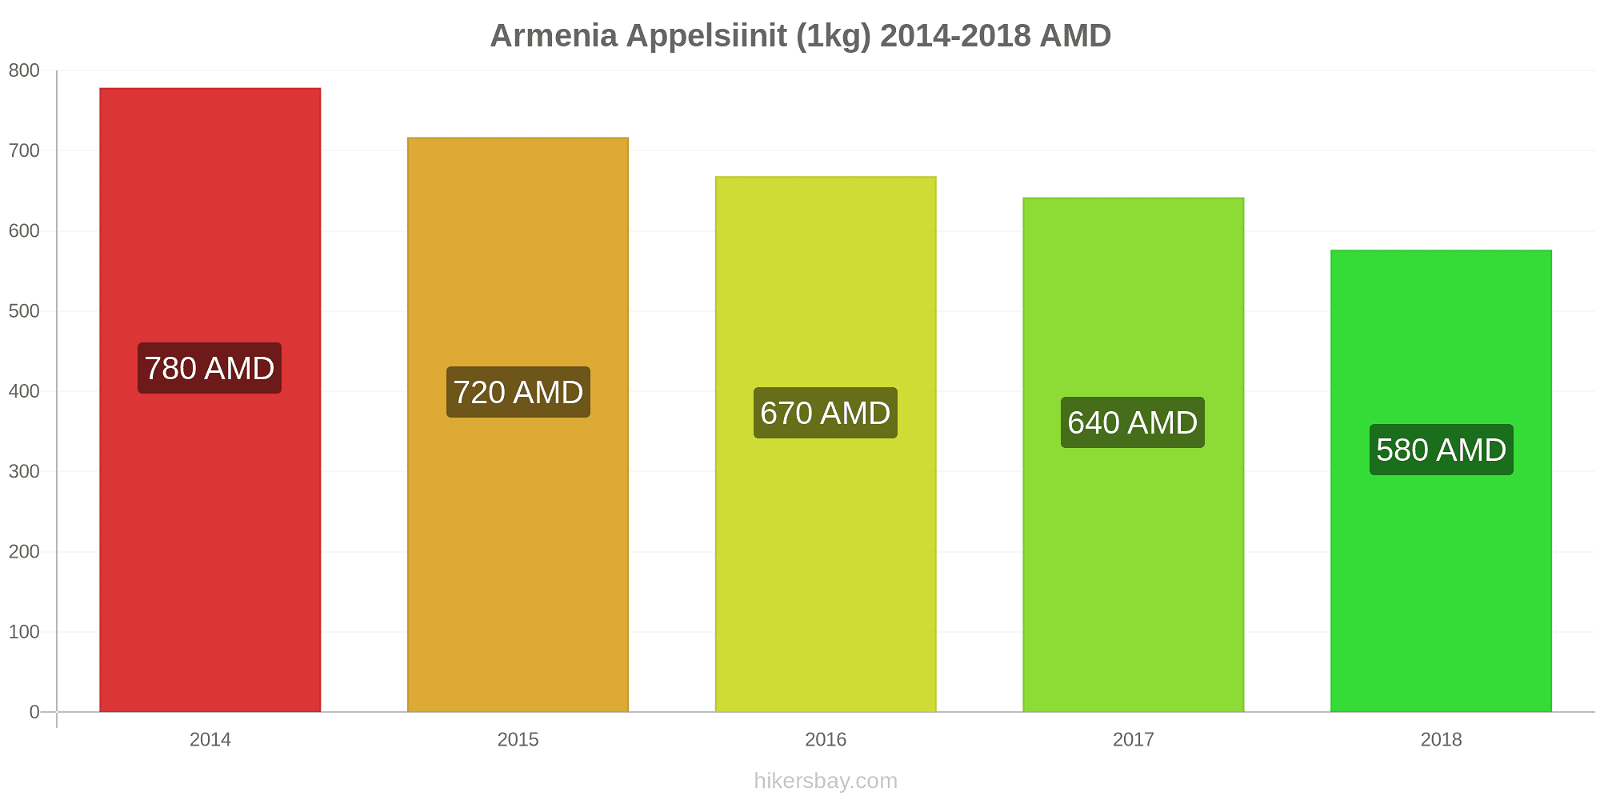 Armenia hintojen muutokset Appelsiinit (1kg) hikersbay.com